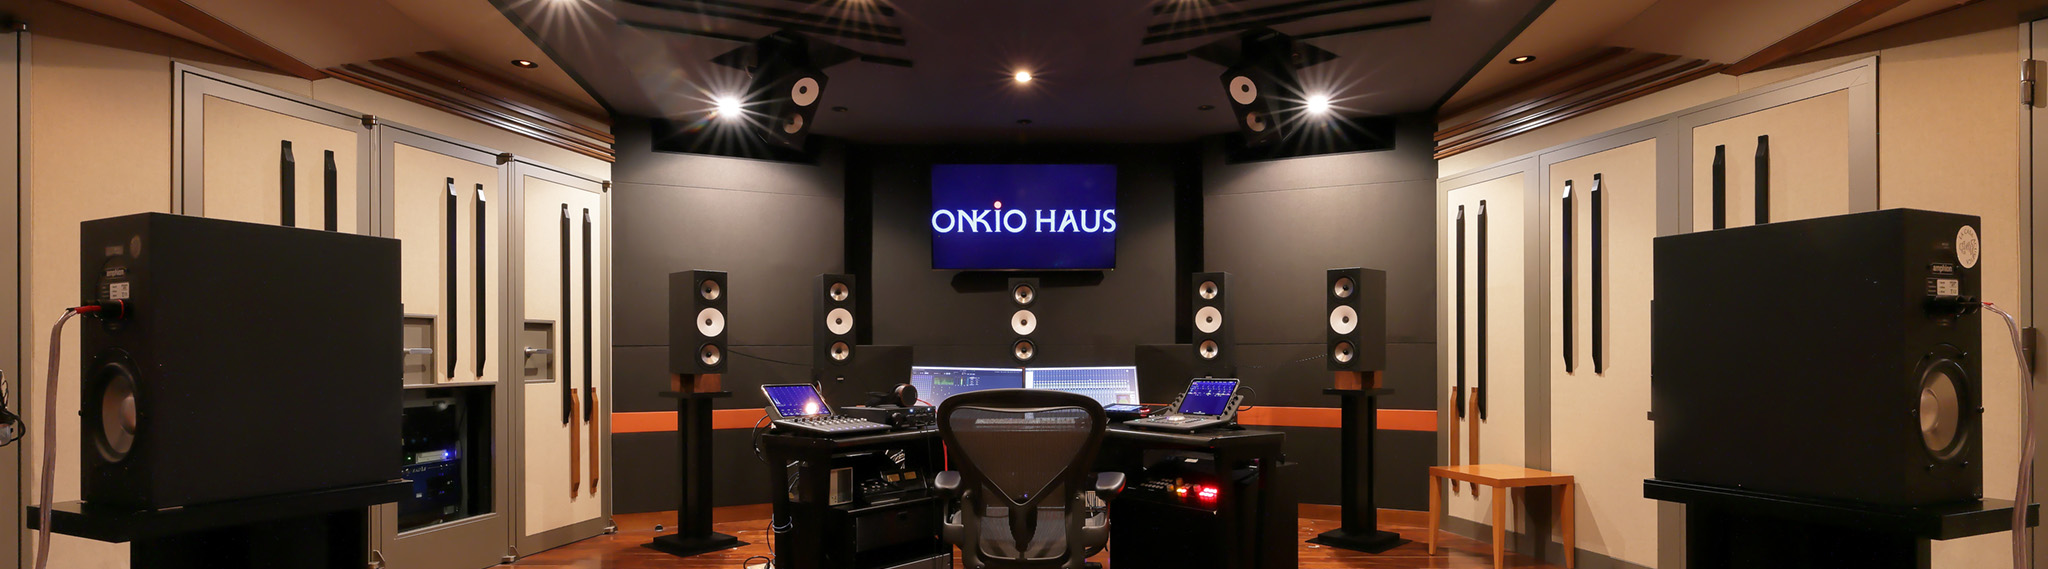 Onkio Haus Studio NO.7 Spatial Audio | Audio Mastering